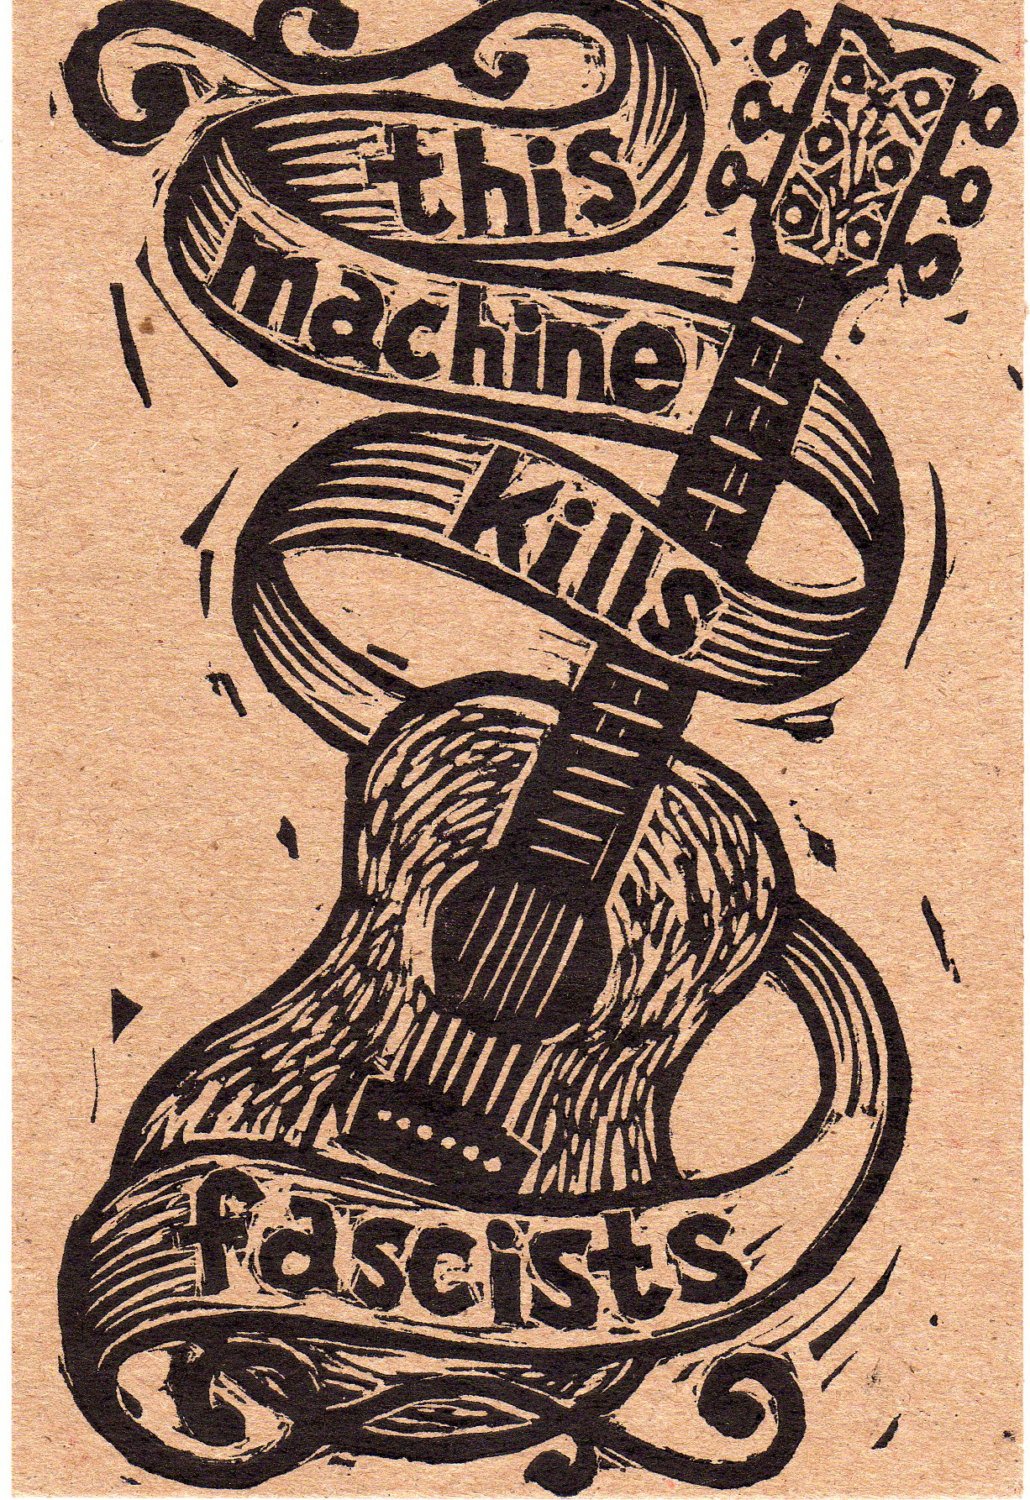 Linocut Postcards 5 Pack This Machine Kills Fascists Letterpress Postcards Woody Guthrie Guitar Linocut - Postcard Set - Hand Printed Cards